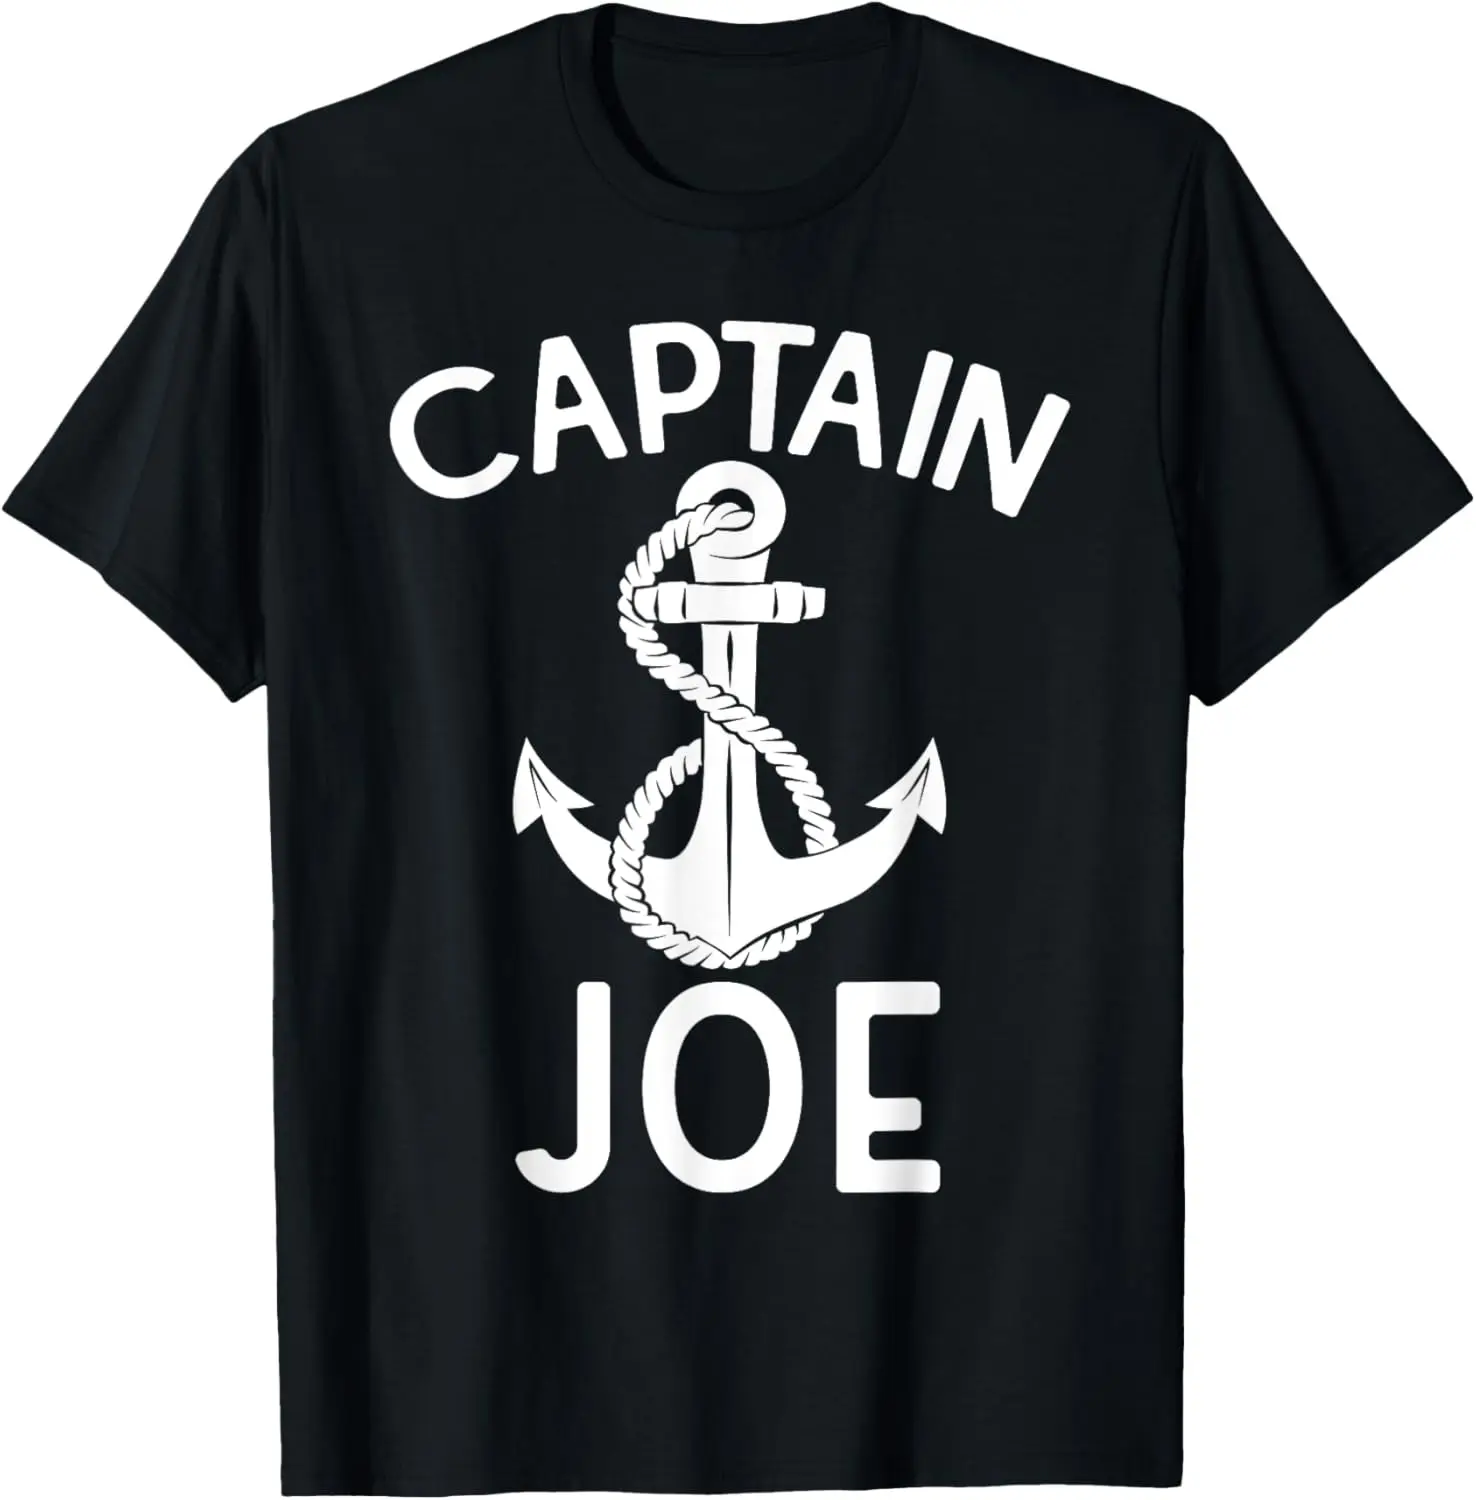 

Captain Joe Ship Yacht Boating Anchor Boat T-Shirt